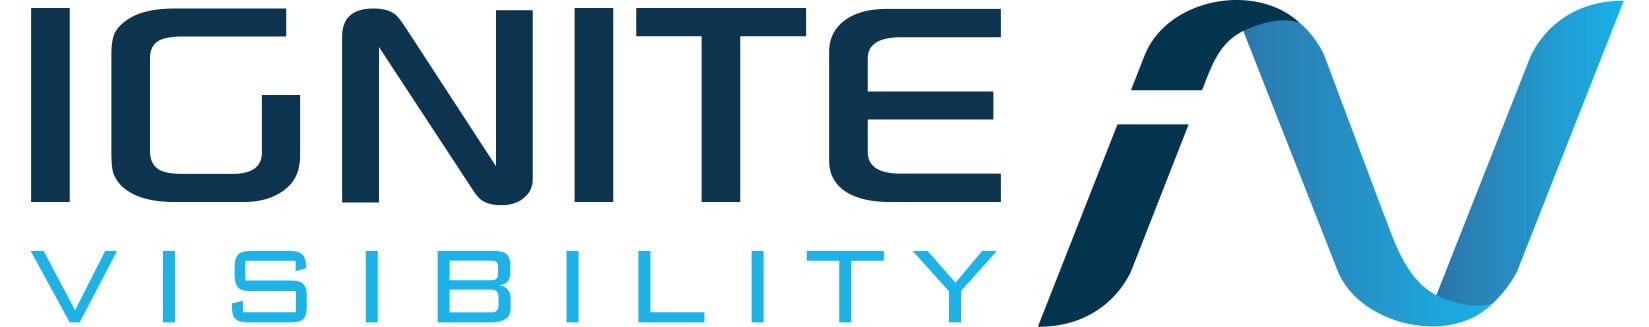 Best San Diego SEO Company Logo: Ignite Visibility